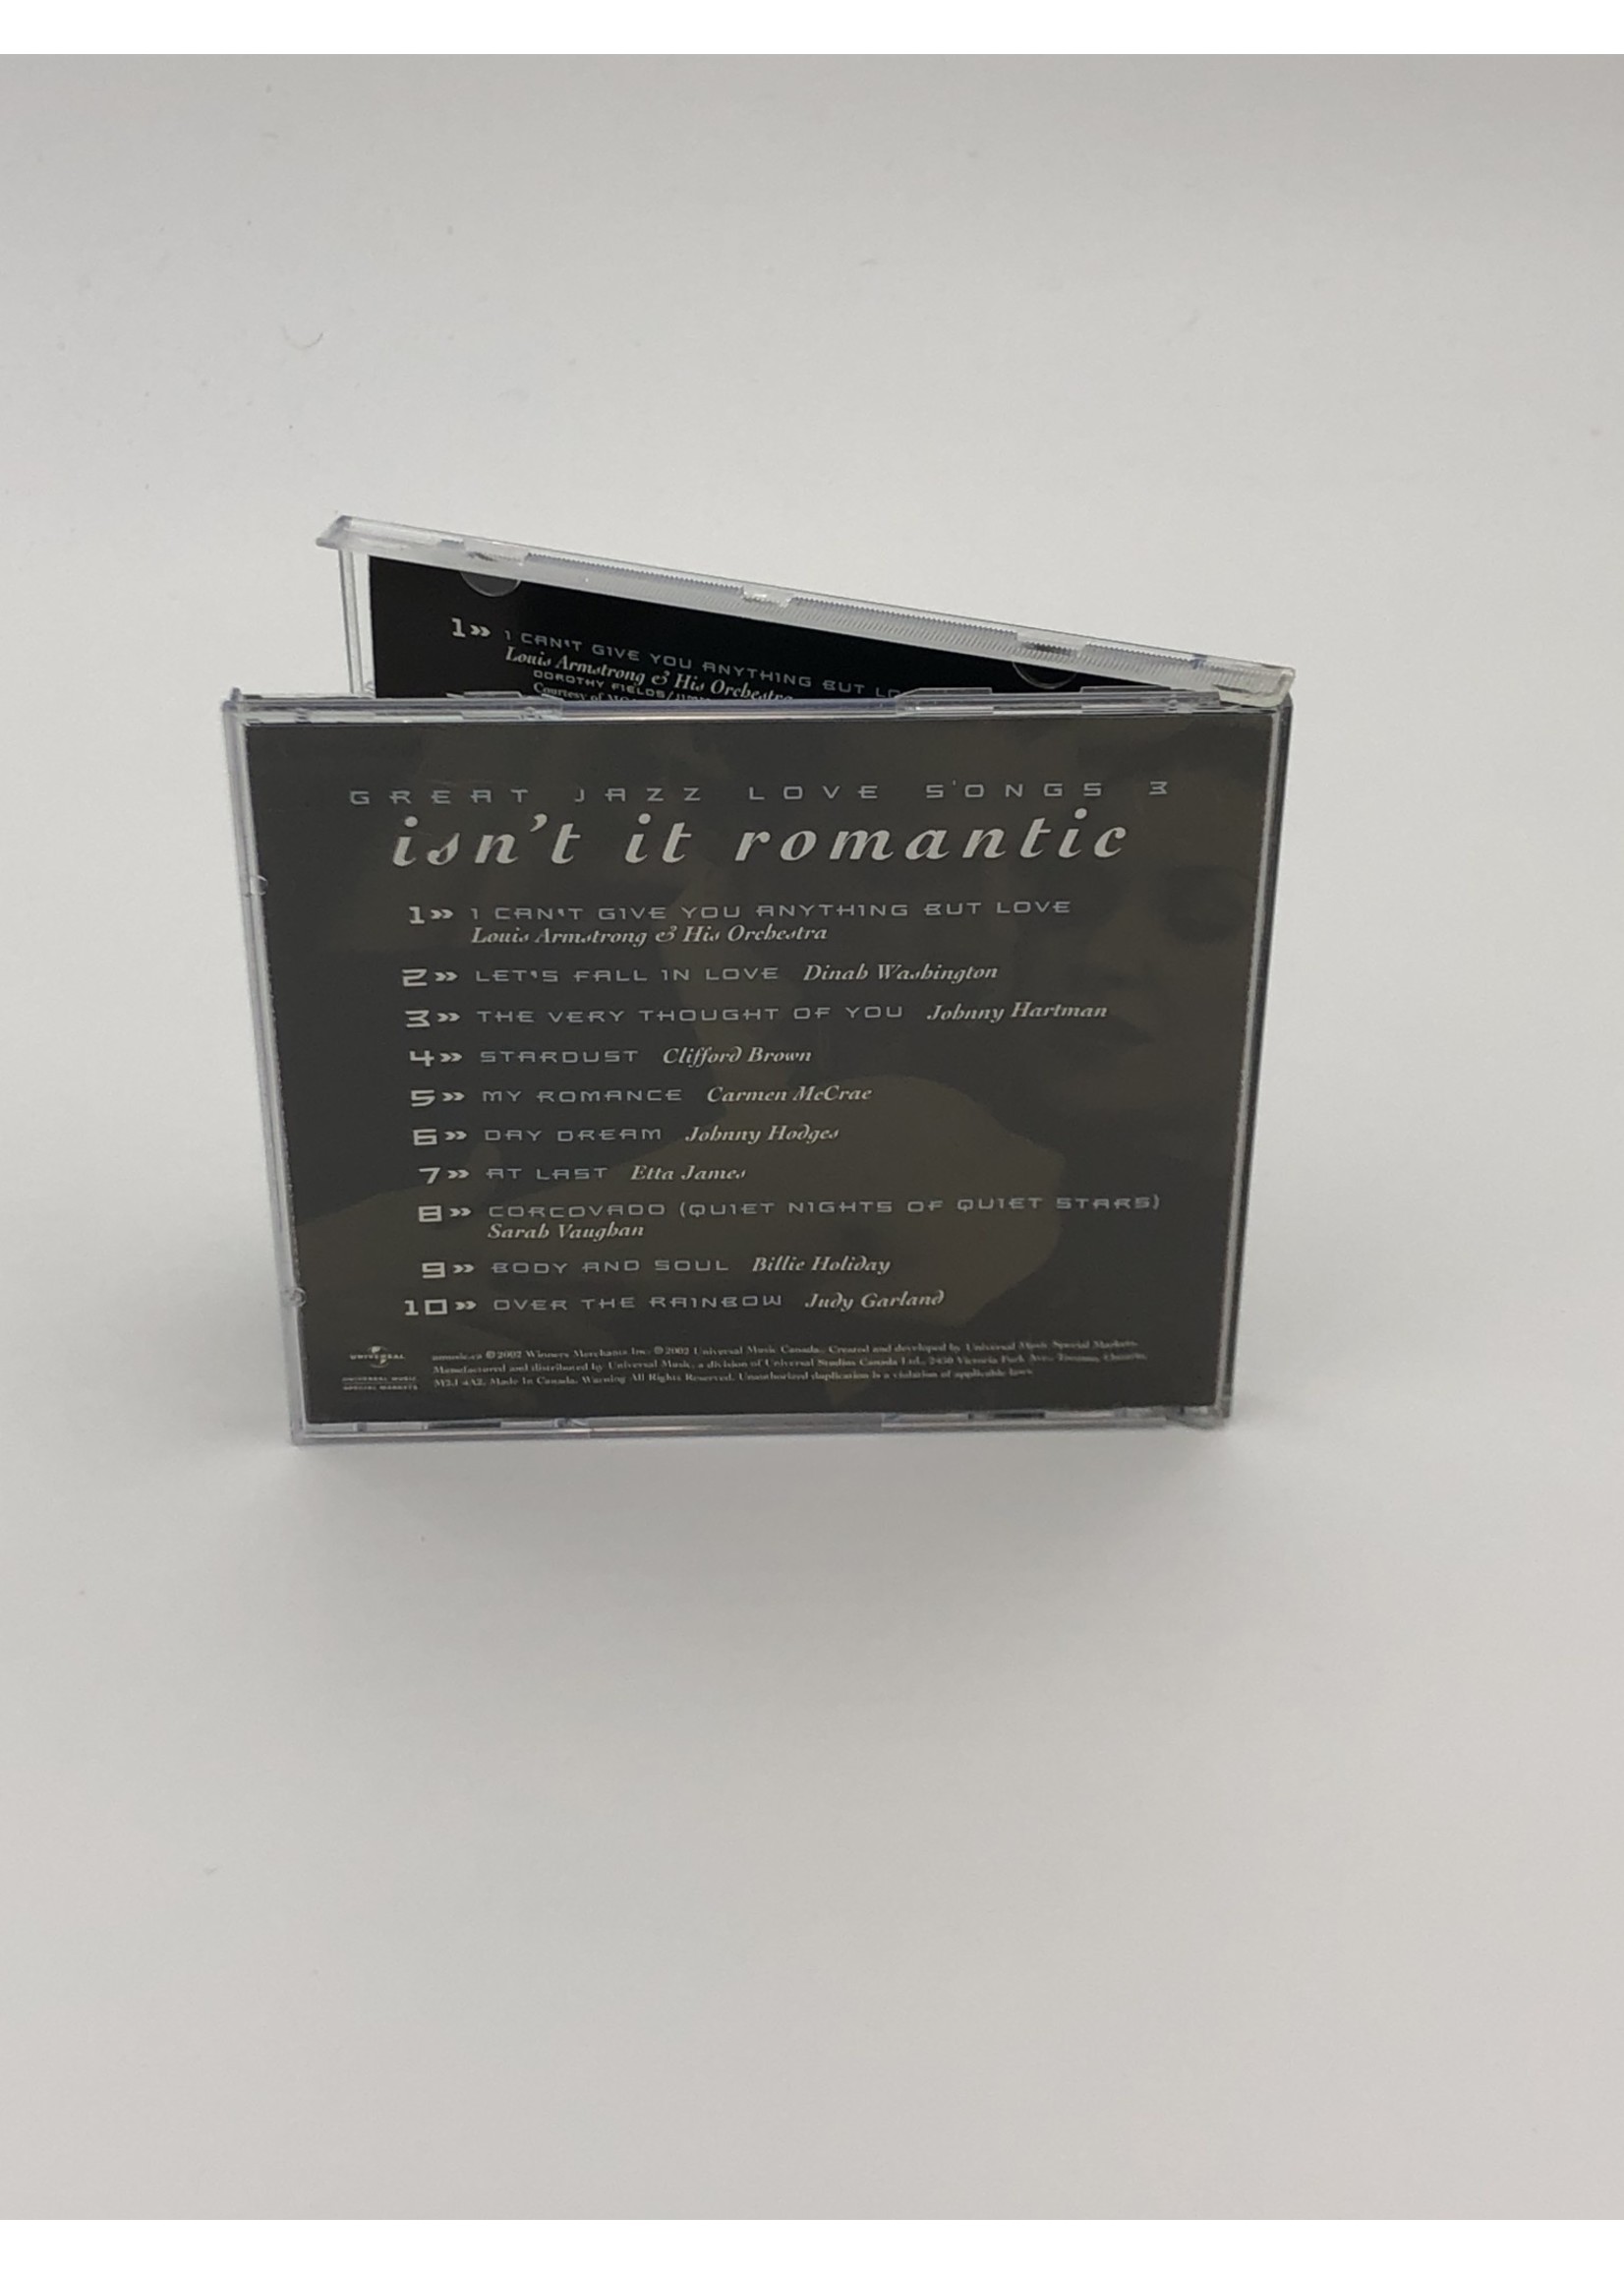 CD Great Jazz Love Songs 3: Isnt It Romantic CD